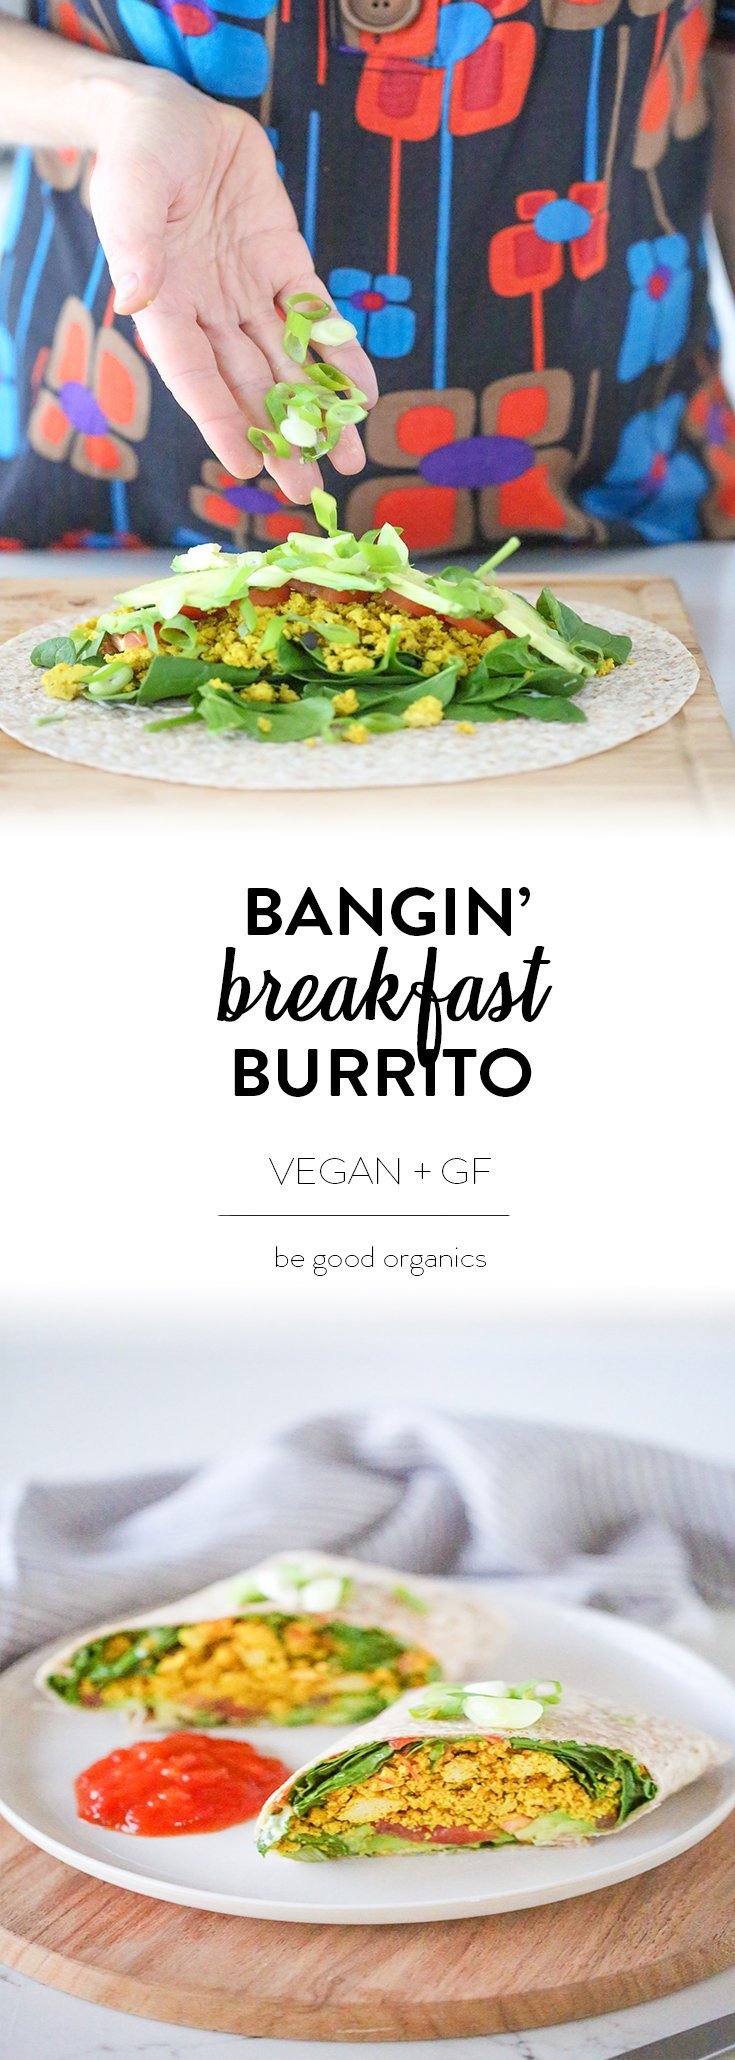 Vegan breakfast burrito with scrambled tofu